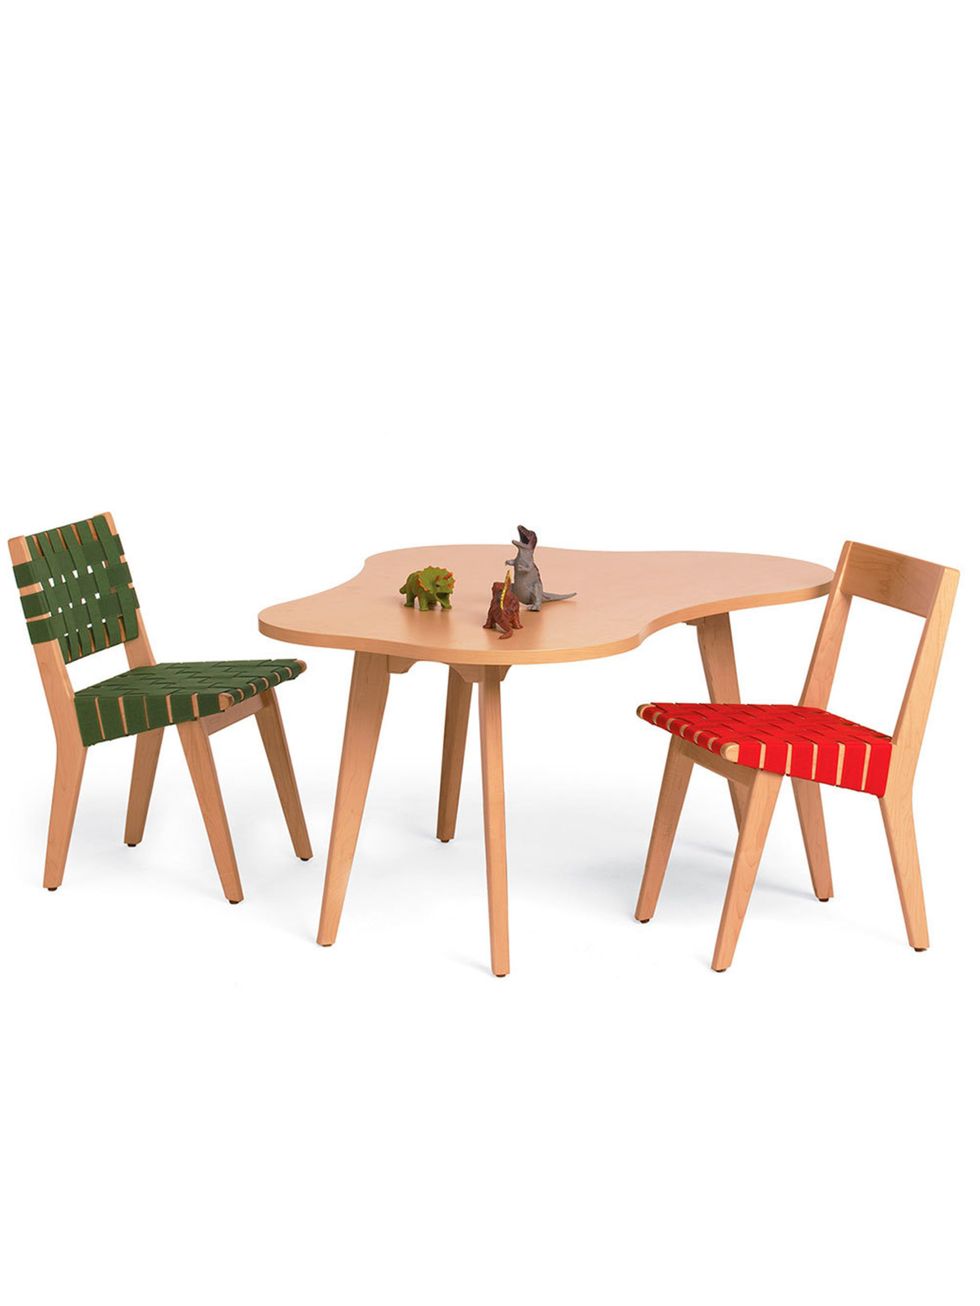 Wood, Furniture, Table, Hardwood, Plywood, Beige, Tan, Wood stain, Outdoor furniture, Balance, 